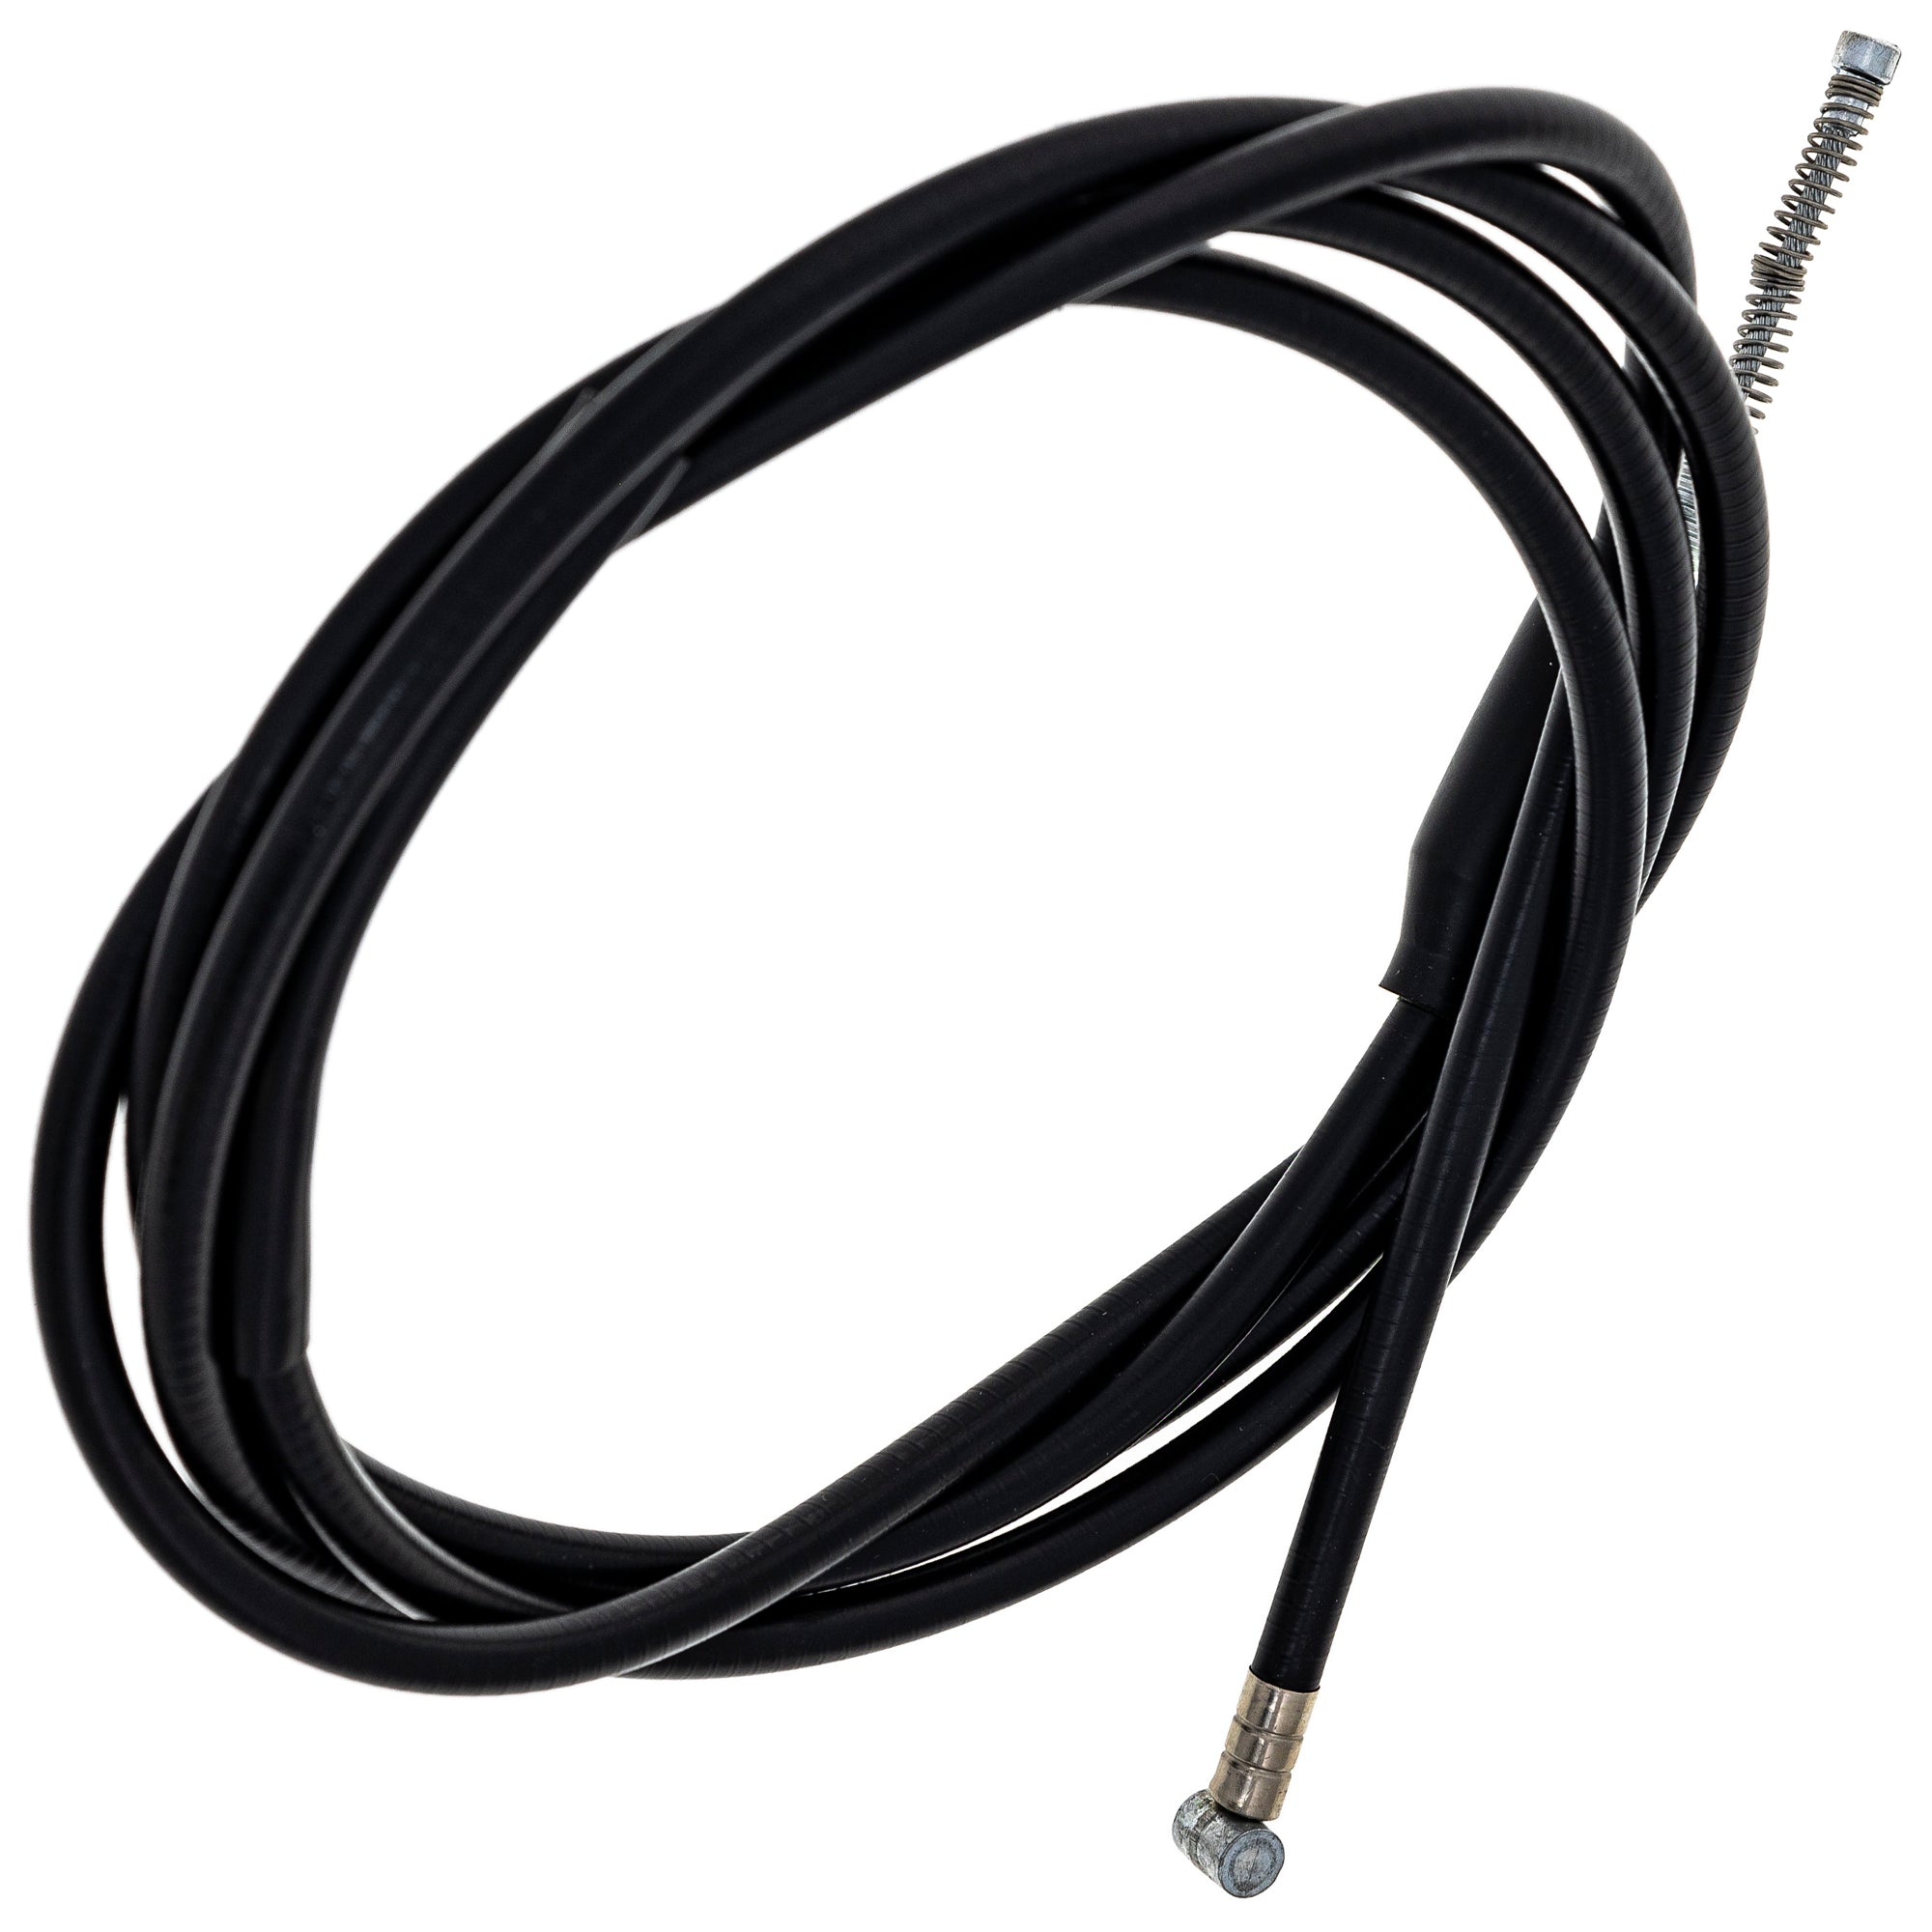 Hand Brake Cable for Honda Odyssey 250 FL250 47520-950-003